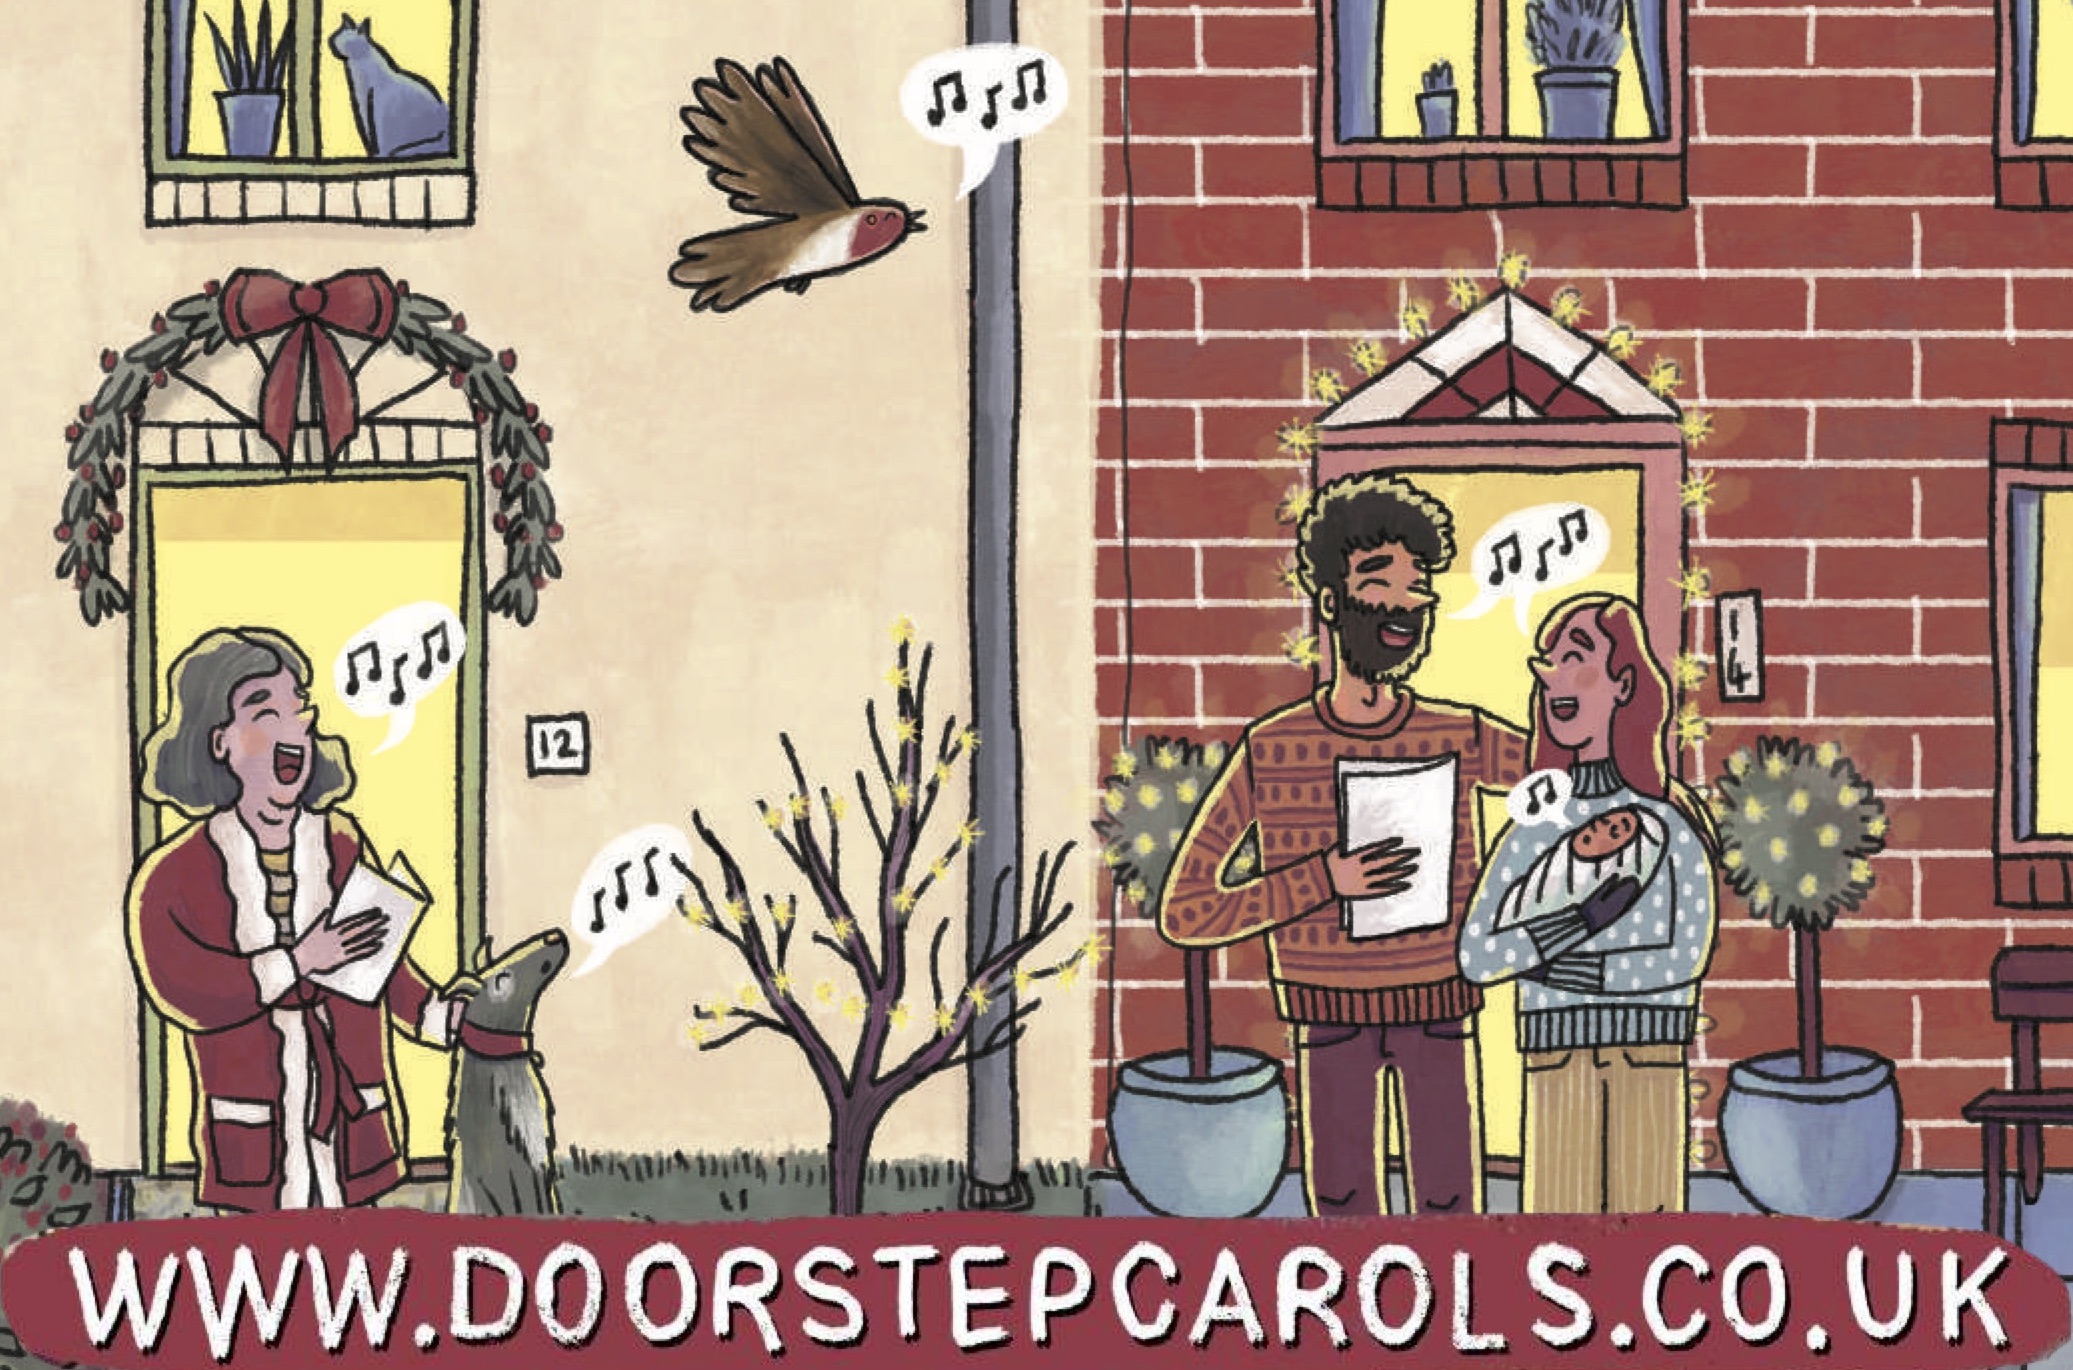 Doorstep Carols, 16th Dec: 6-7pm